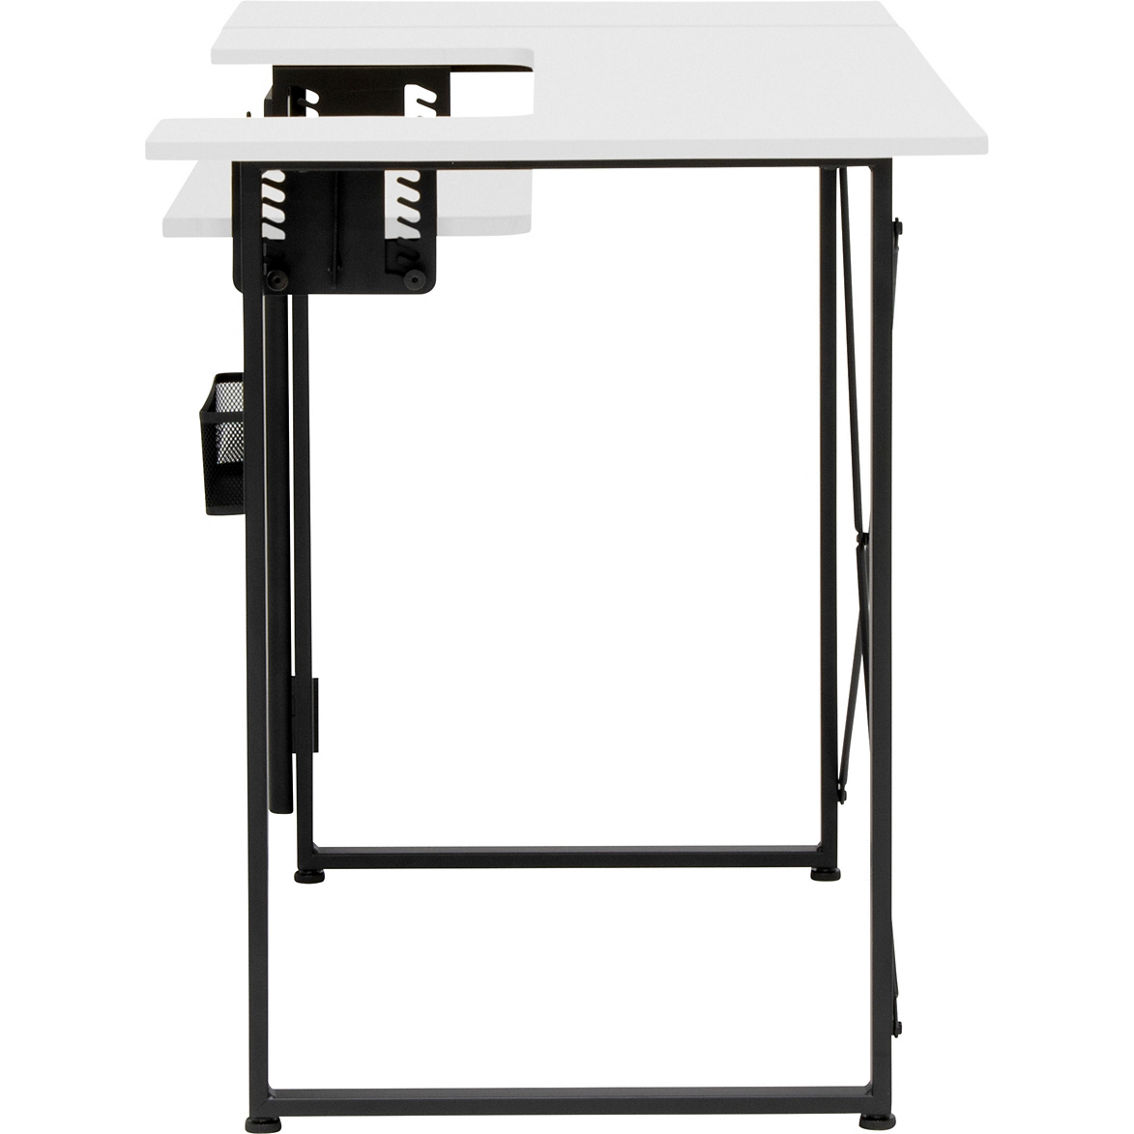 Studio Designs Pivot Panel Sewing Table, White - Image 2 of 9